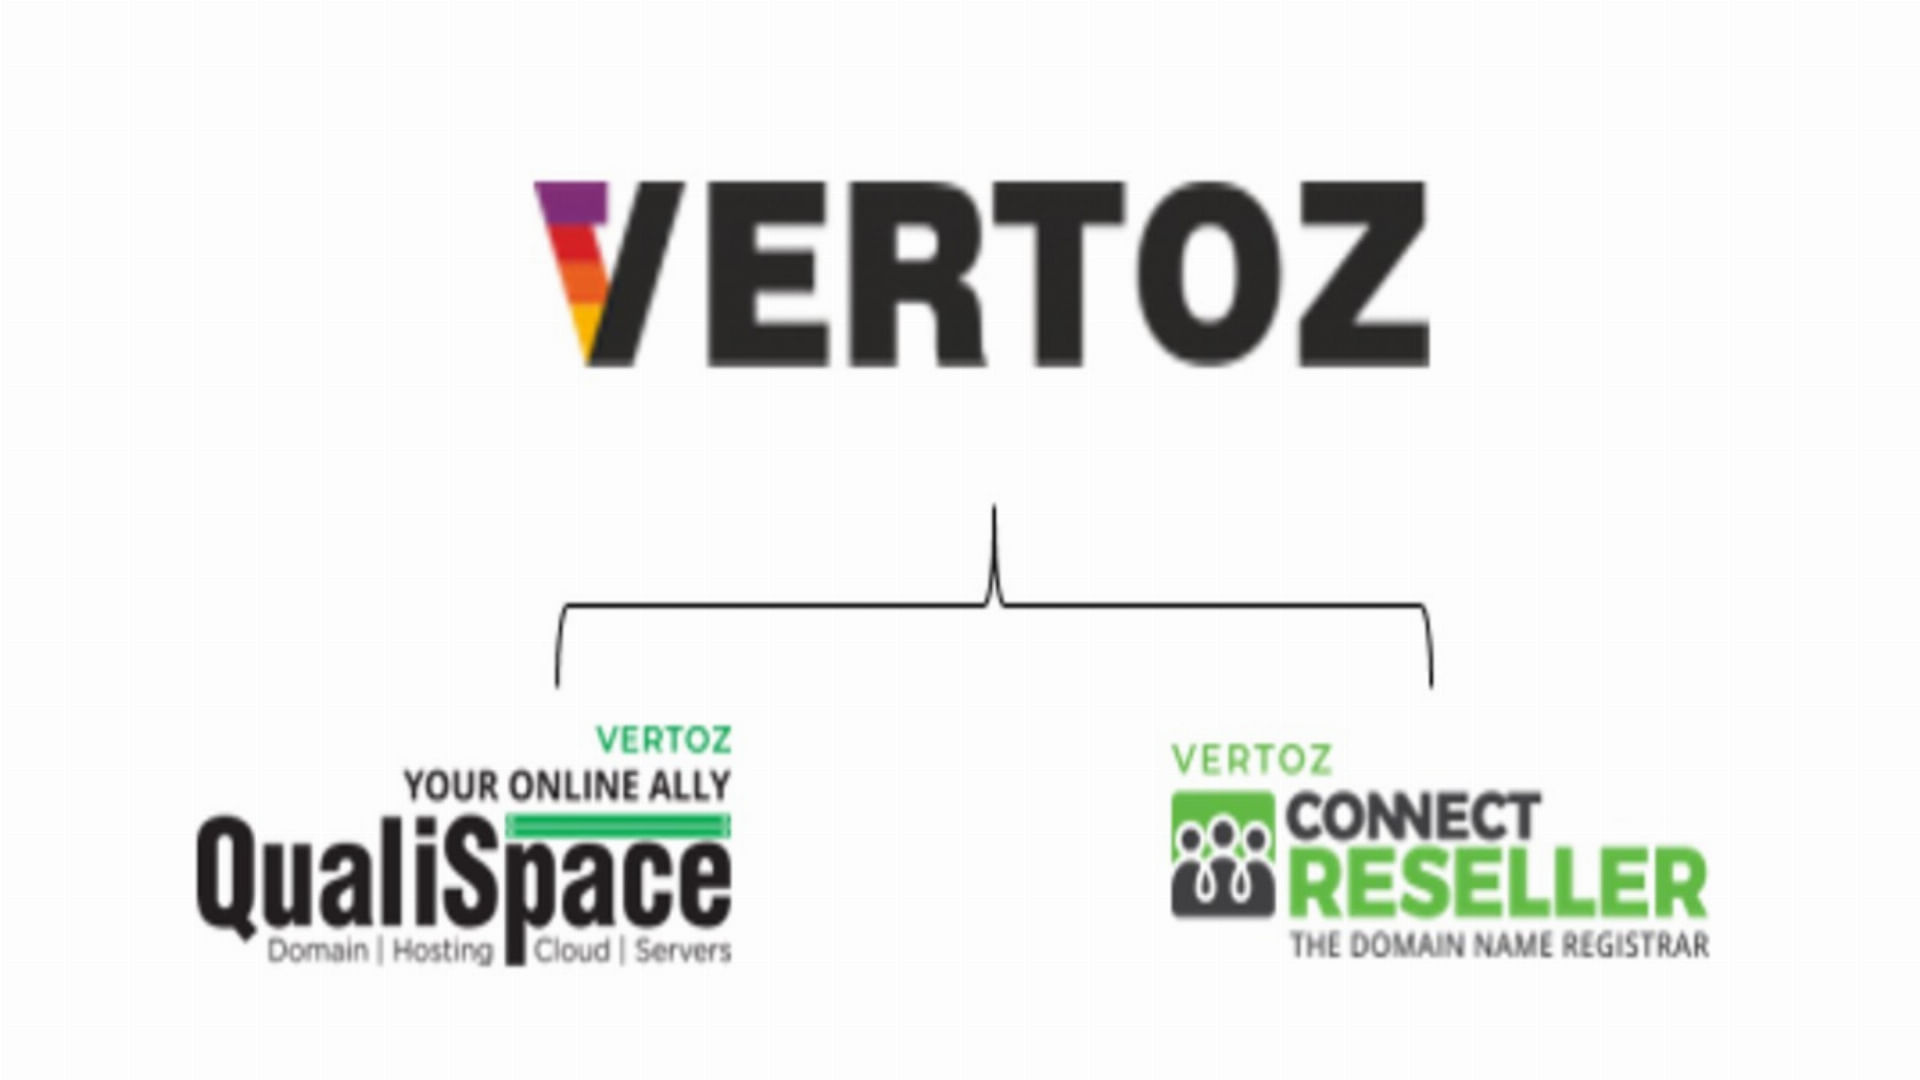 <div class="paragraphs"><p>Vertoz Ventures into the CloudTech sector through the strategic merger</p></div>